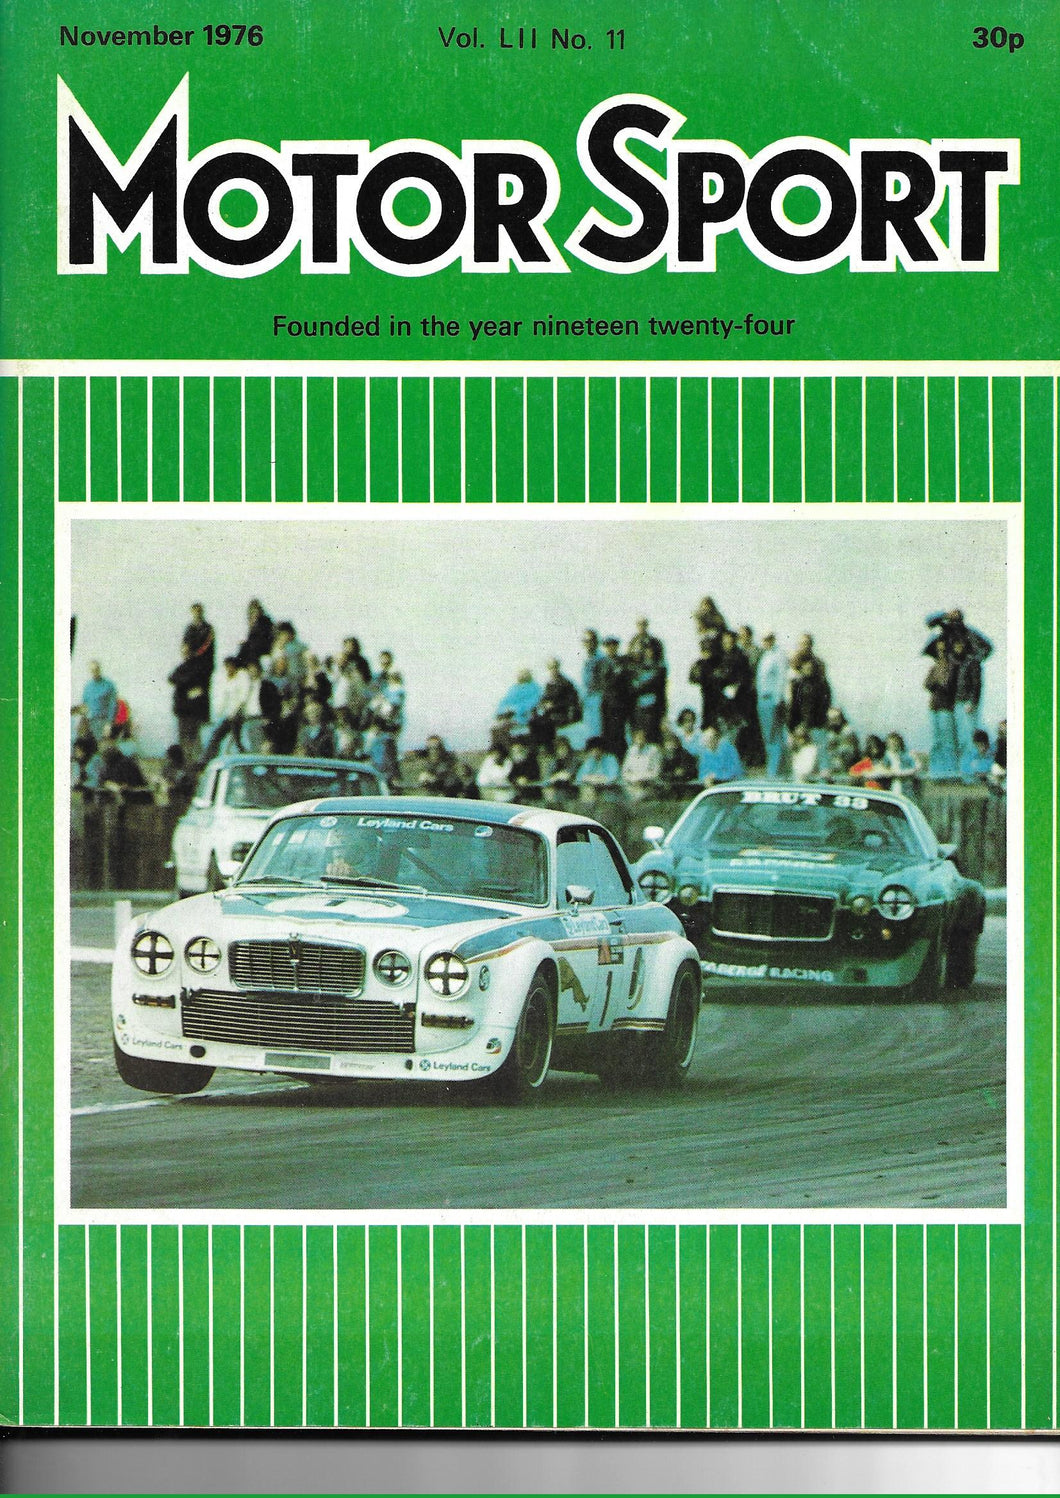 Motor Sport Magazine Vol LII No 11 November 1976